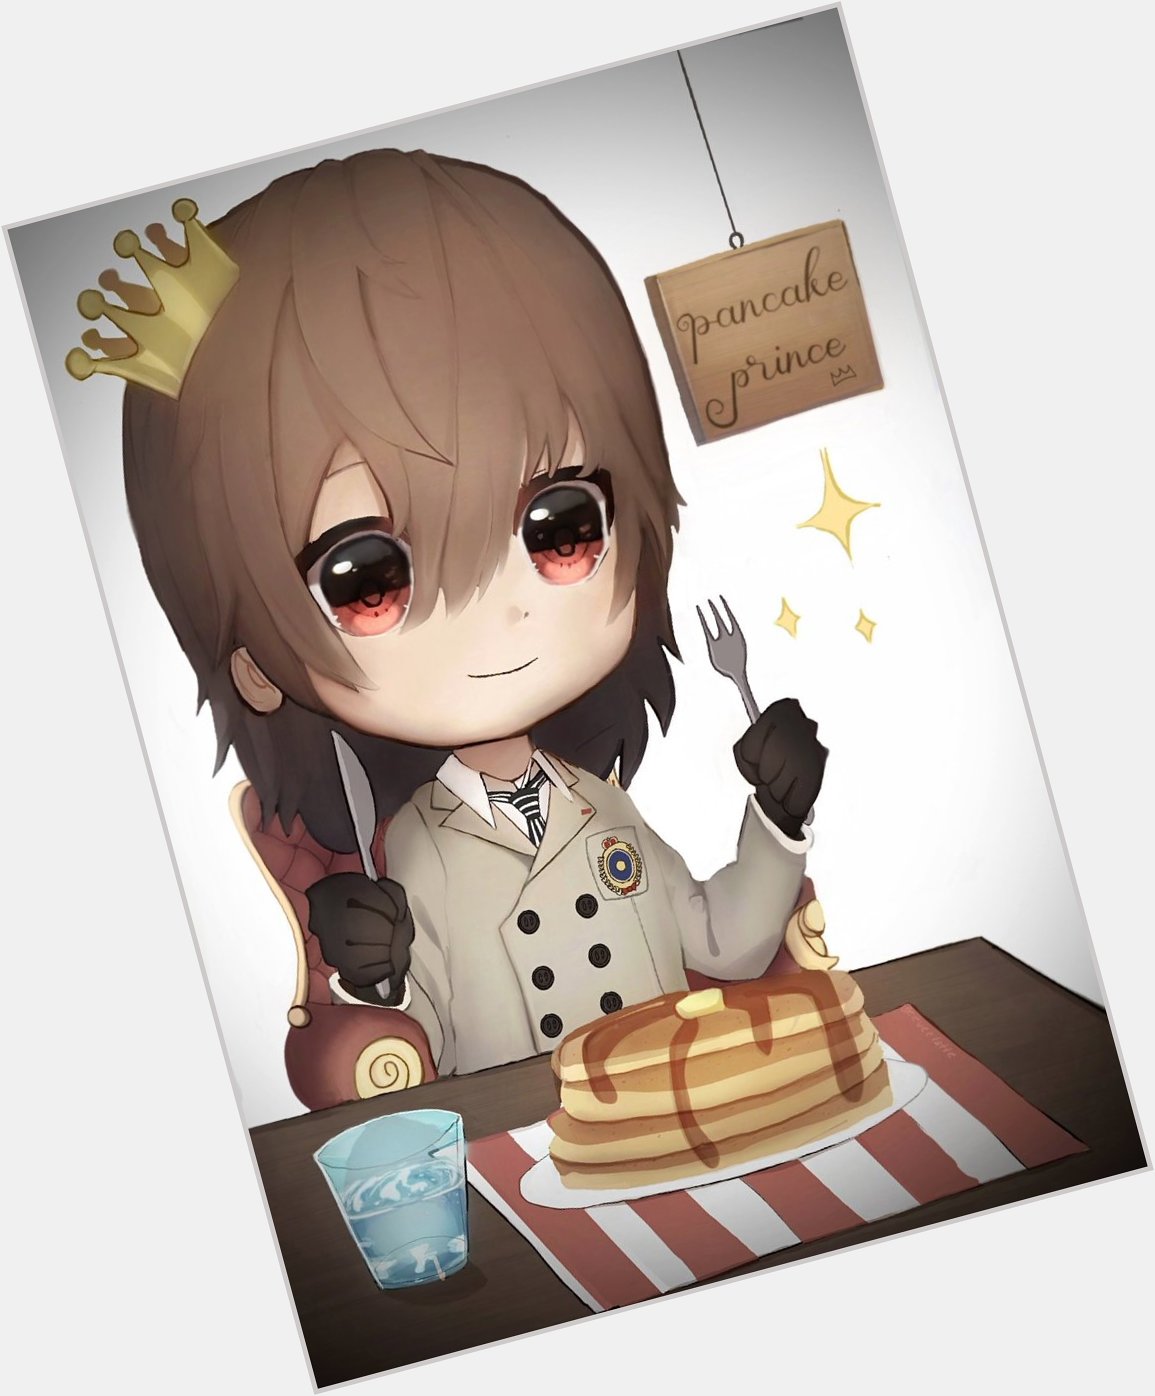 Happy Birthday pancake prince.. Akechi Goro! :D        